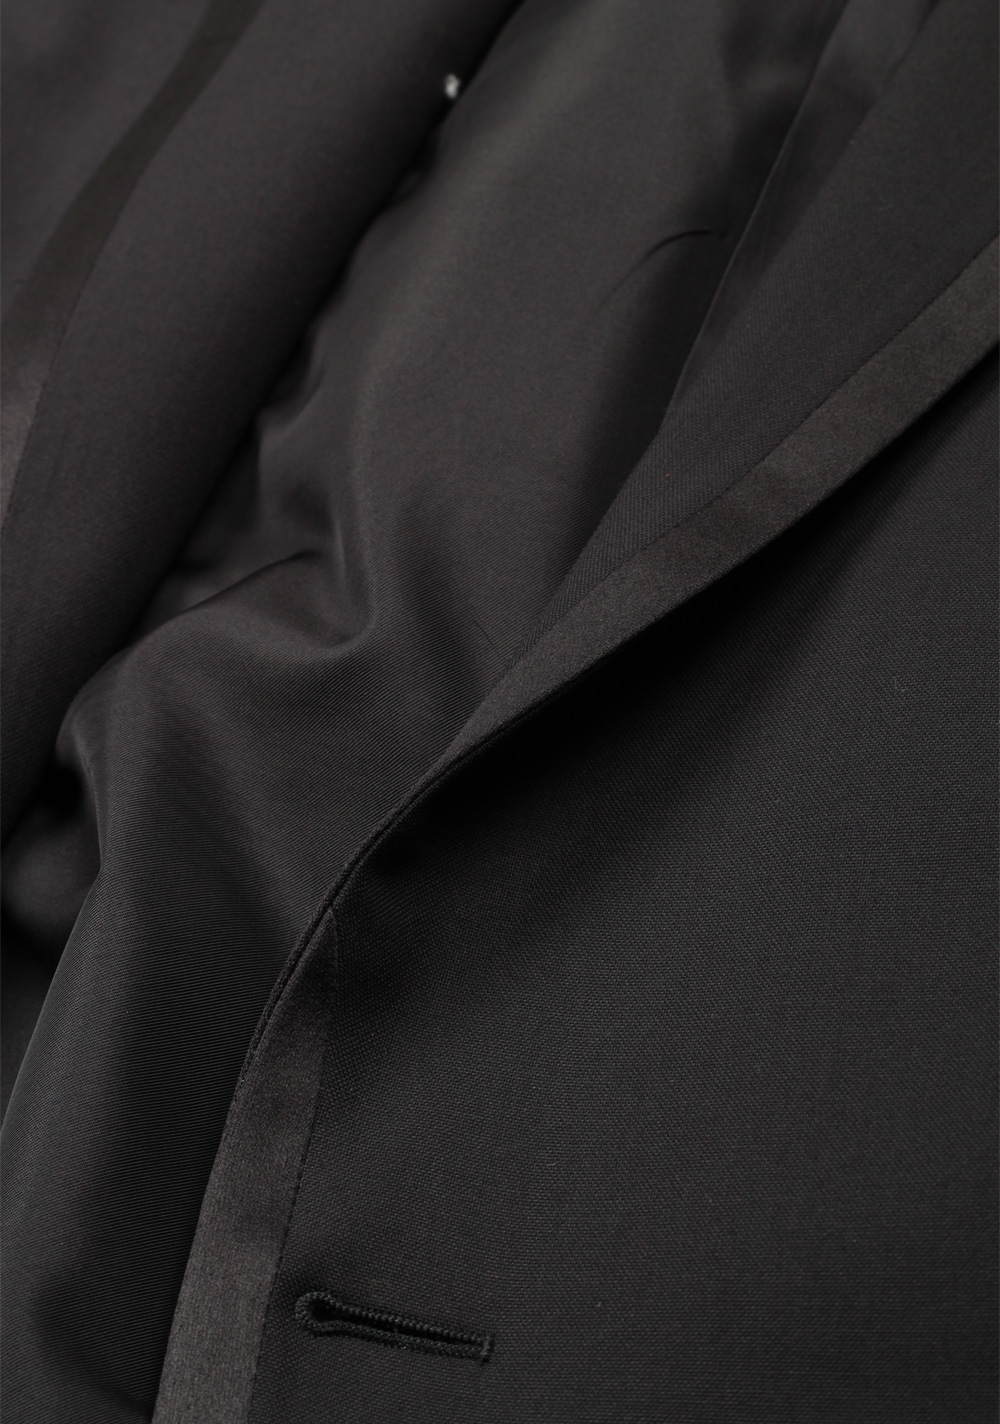 TOM FORD O’Connor Black Sport Coat Tuxedo Dinner Jacket Size 50 / 40R U.S. Fit Y | Costume Limité